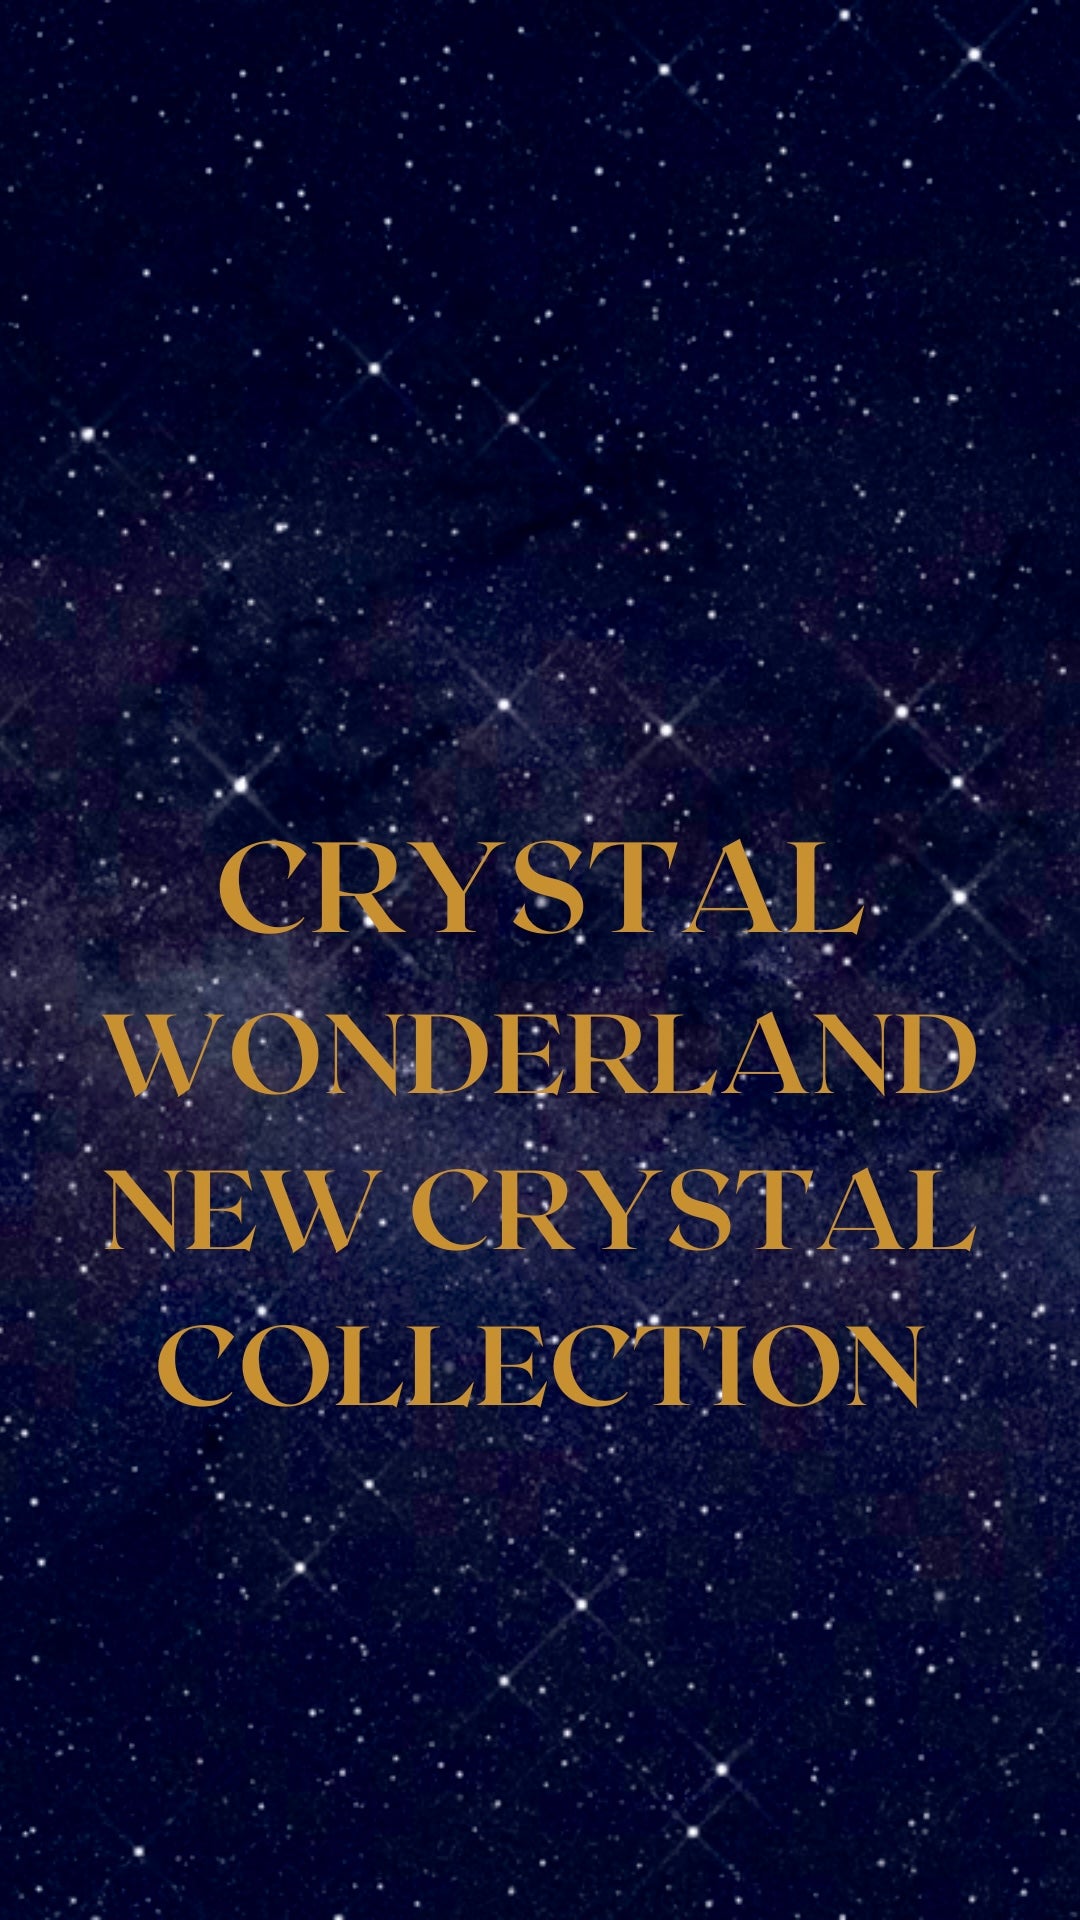 Crystal Wonderland Zodiac Crystal Set Taurus